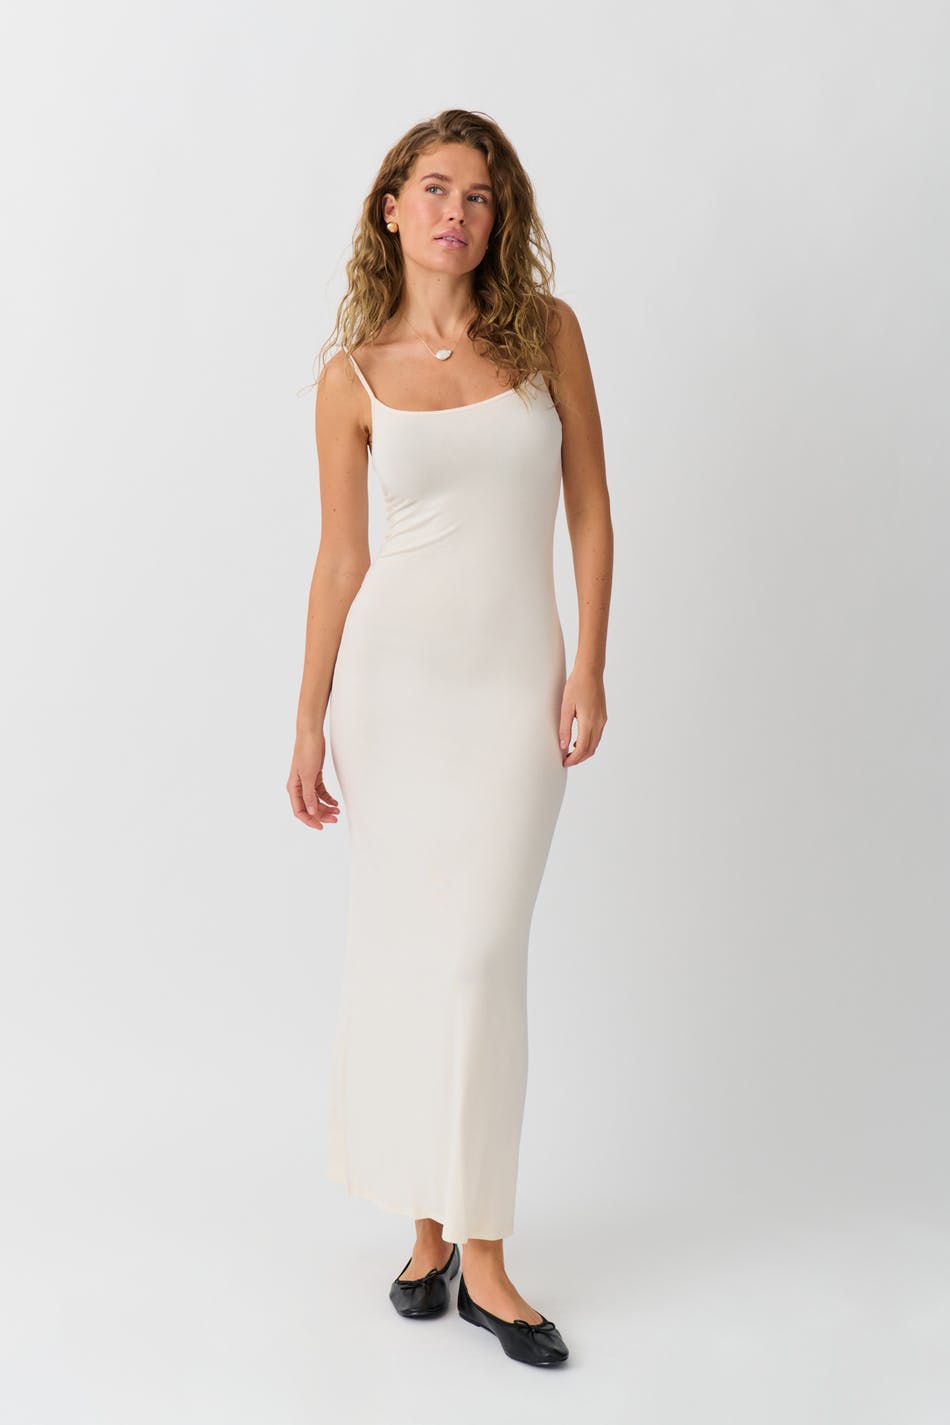 Gina Tricot - Soft touch maxi slip dress - långklänningar - White - XS - Female